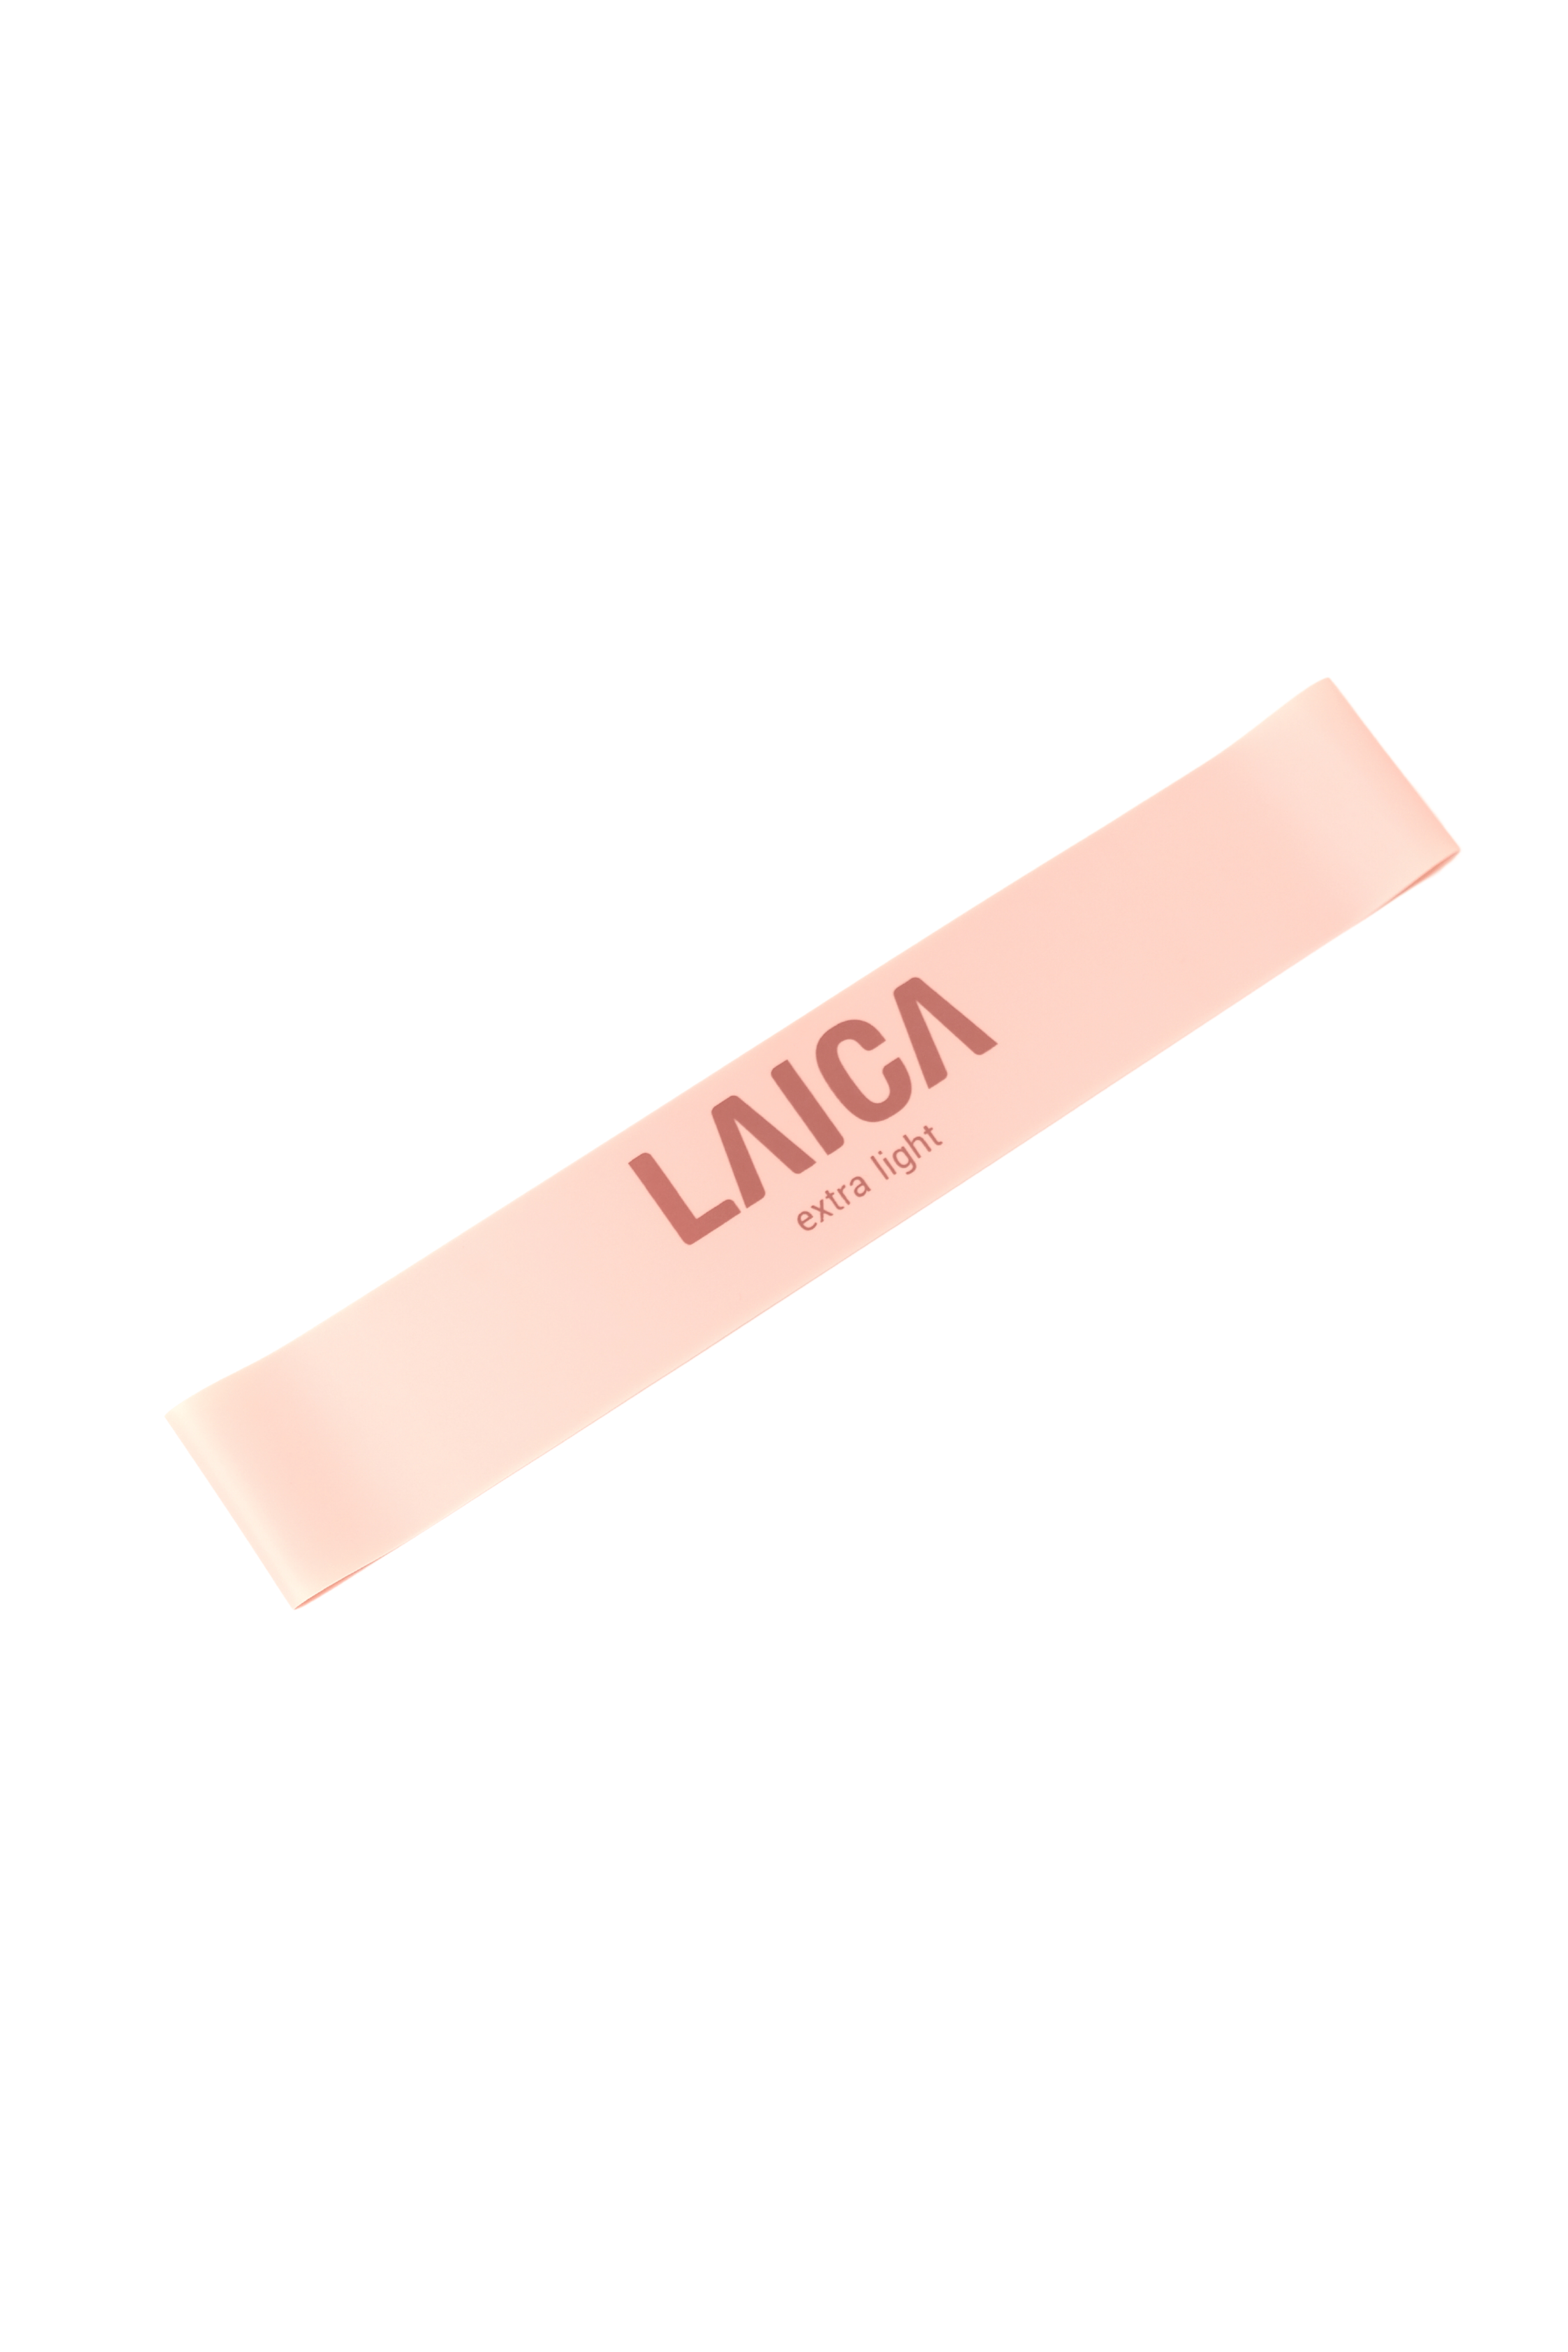 LAICA Resistance Loop Bands - Light Pink